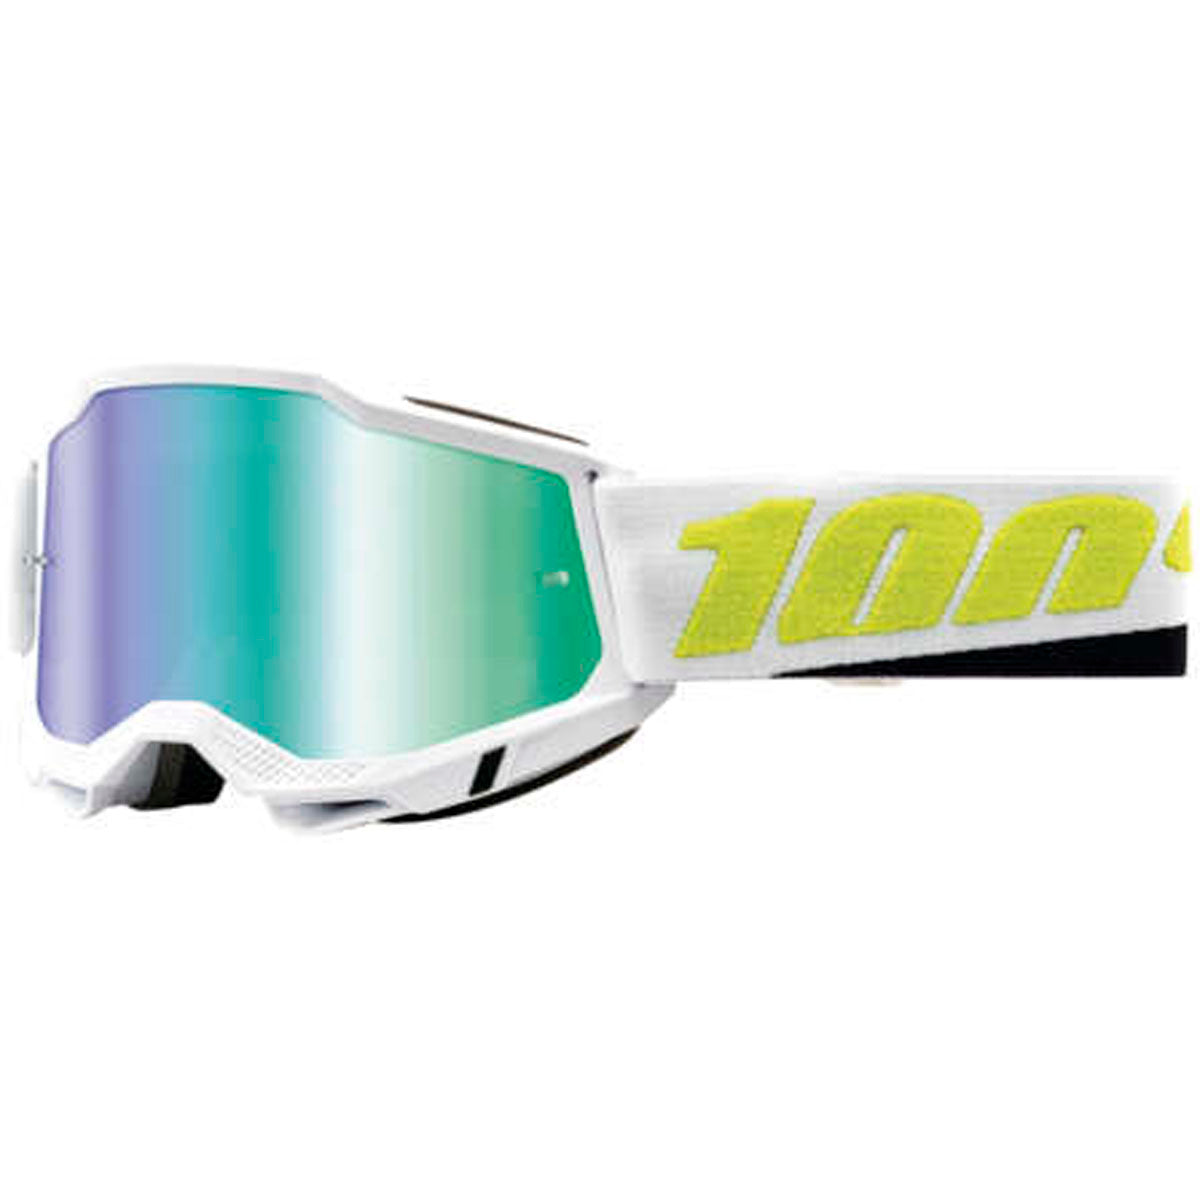 100% Accuri 2 Goggles Peyote / Green Mirrored Lens